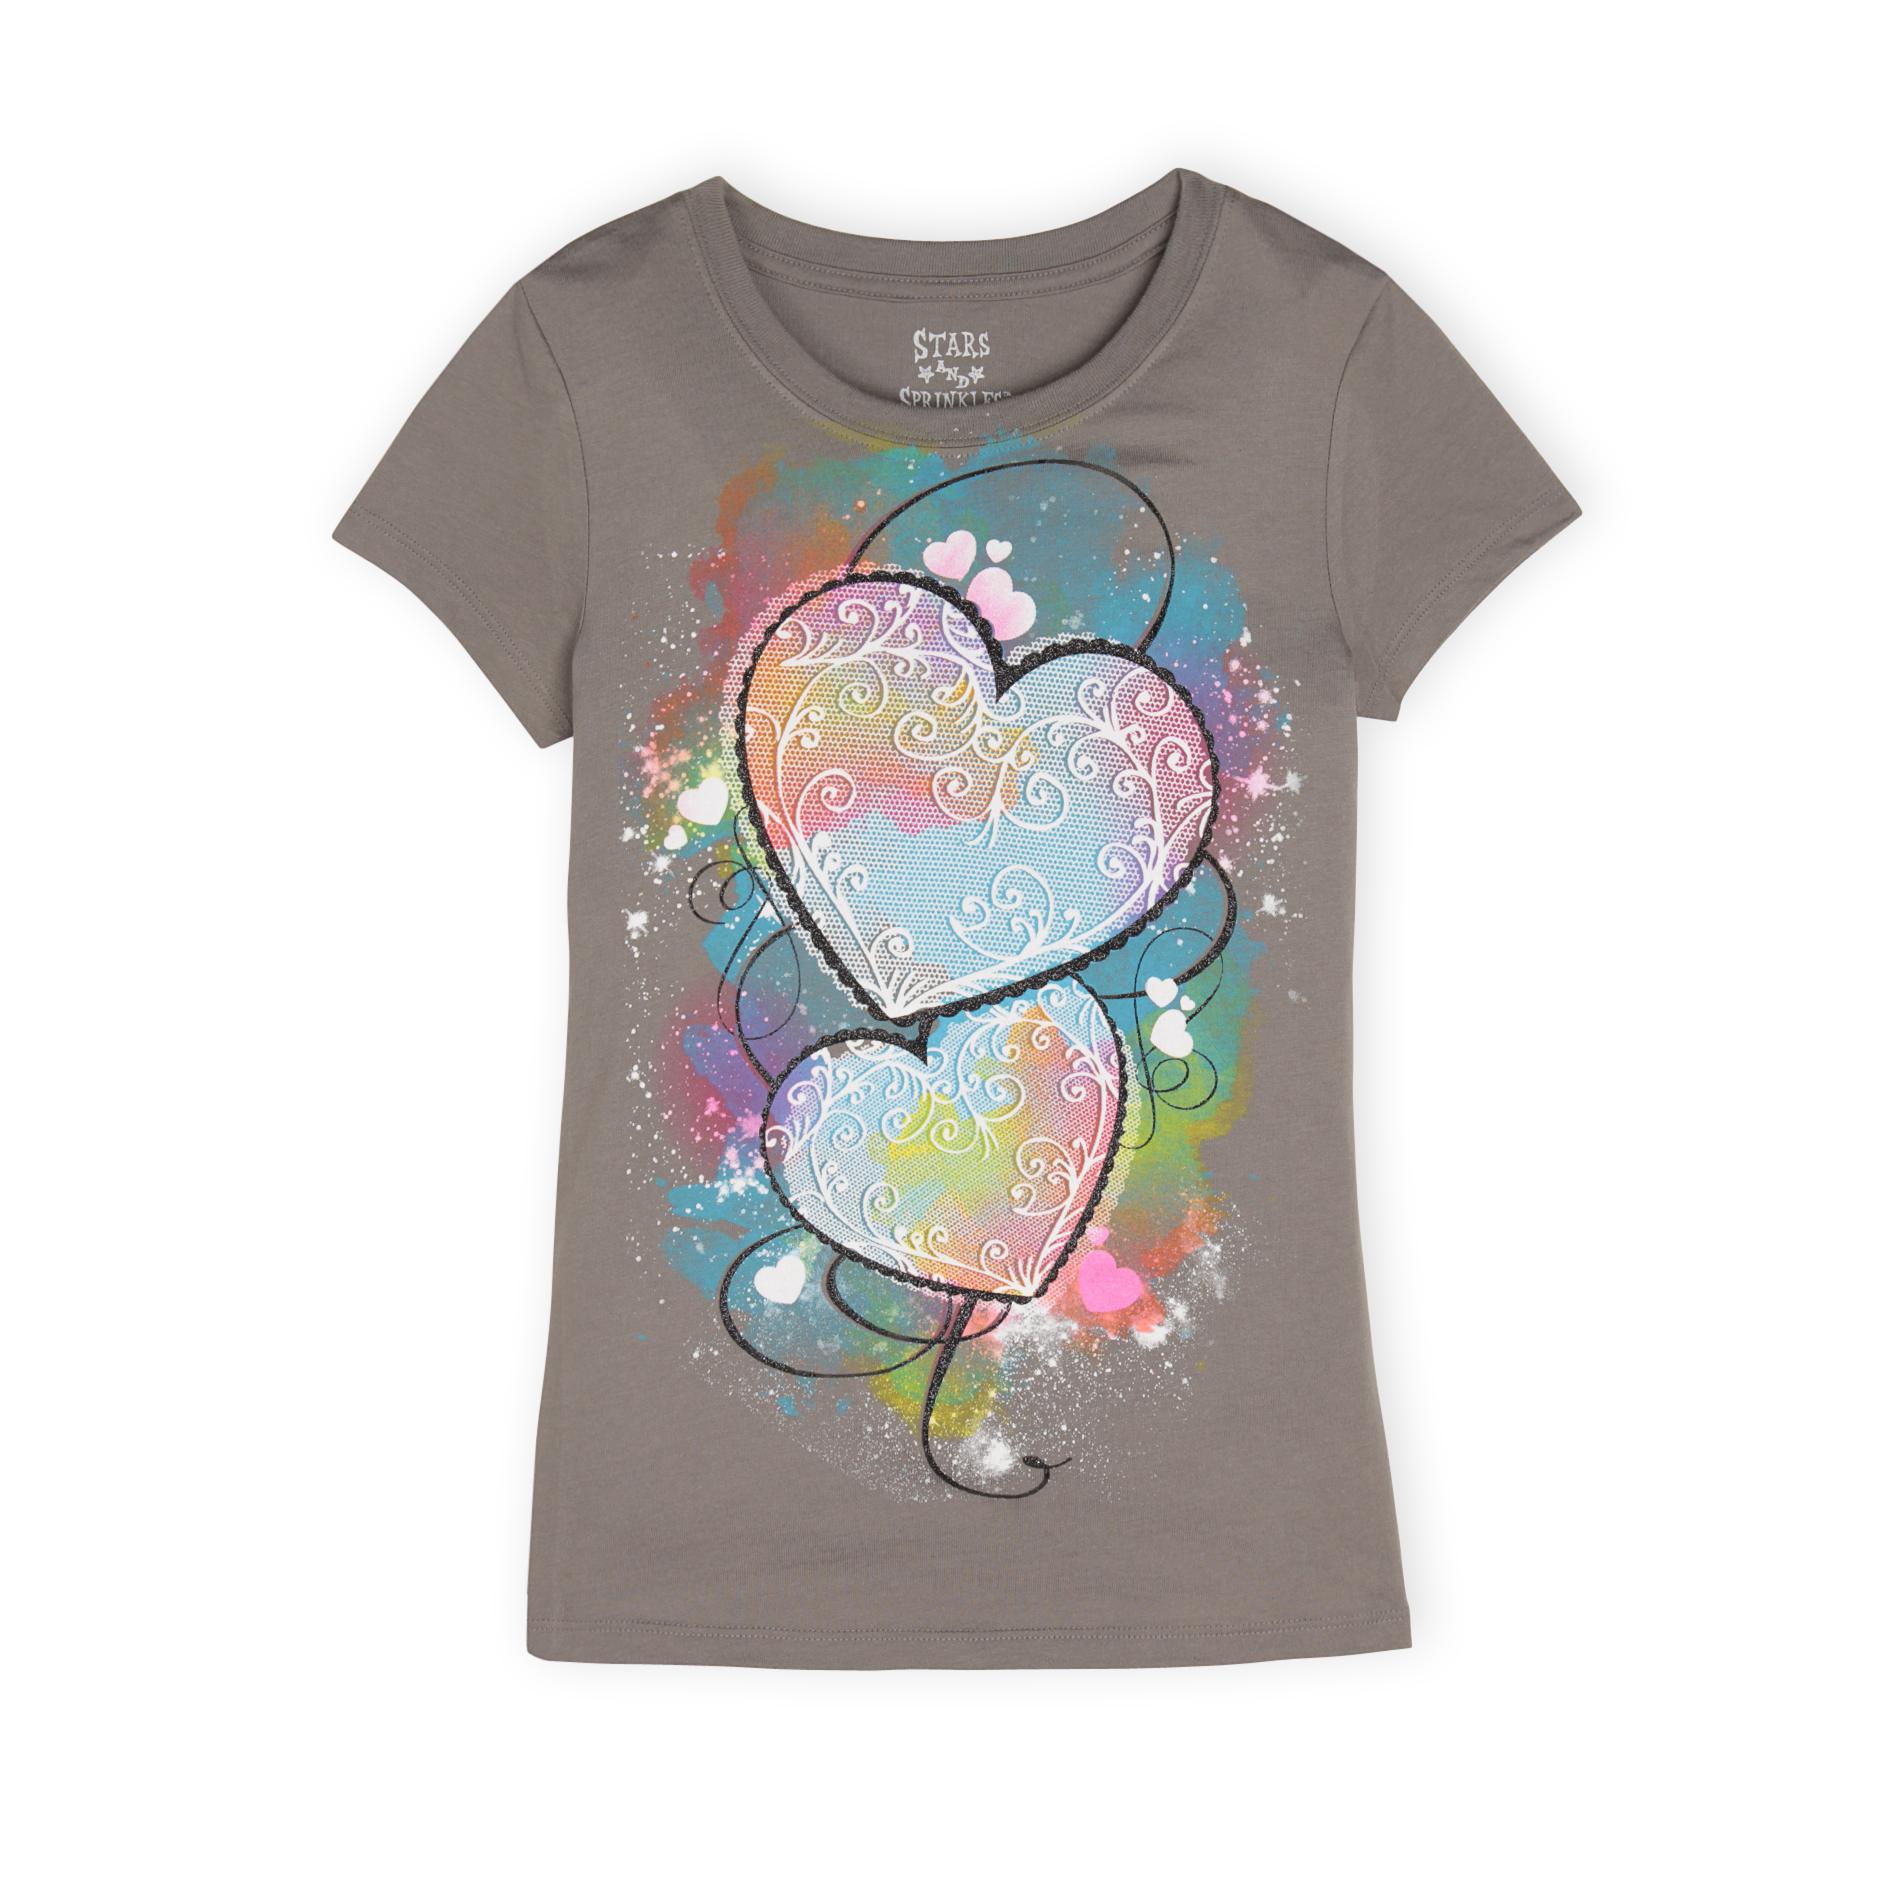 Hybrid Girl's Graphic T-Shirt - Hearts